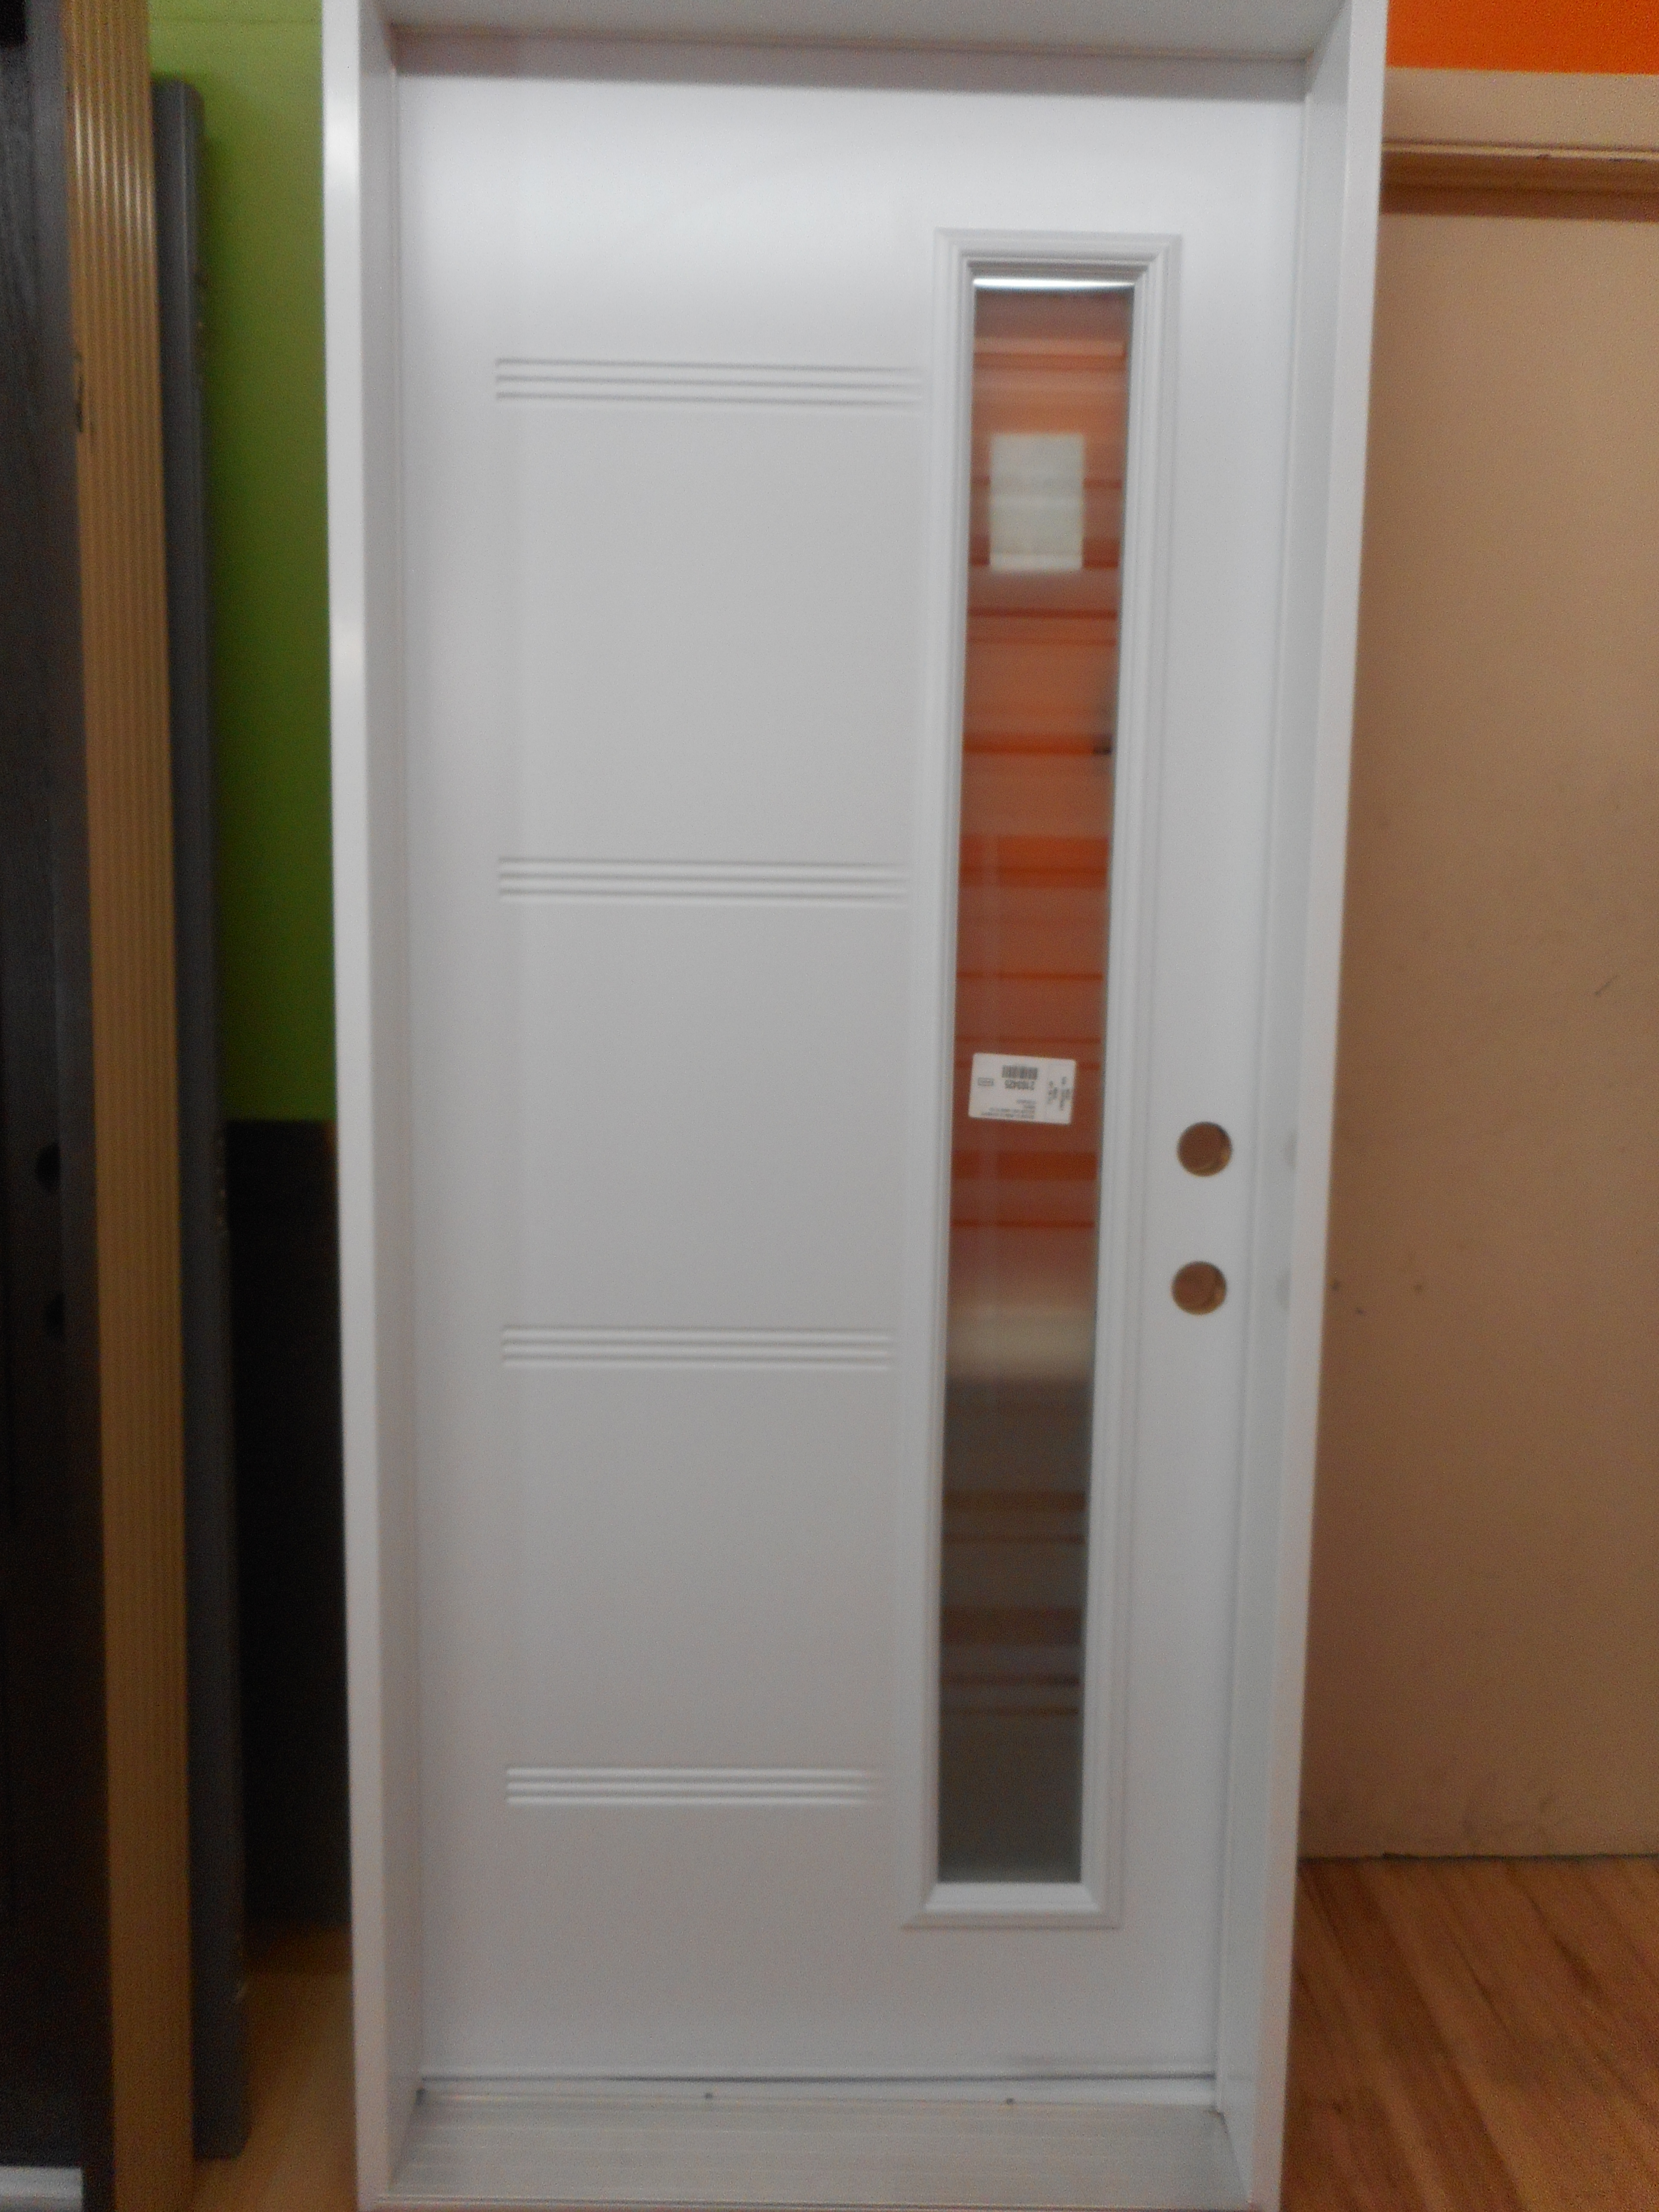 Residential Entry Doors | Newcastle Aluminum Inc.